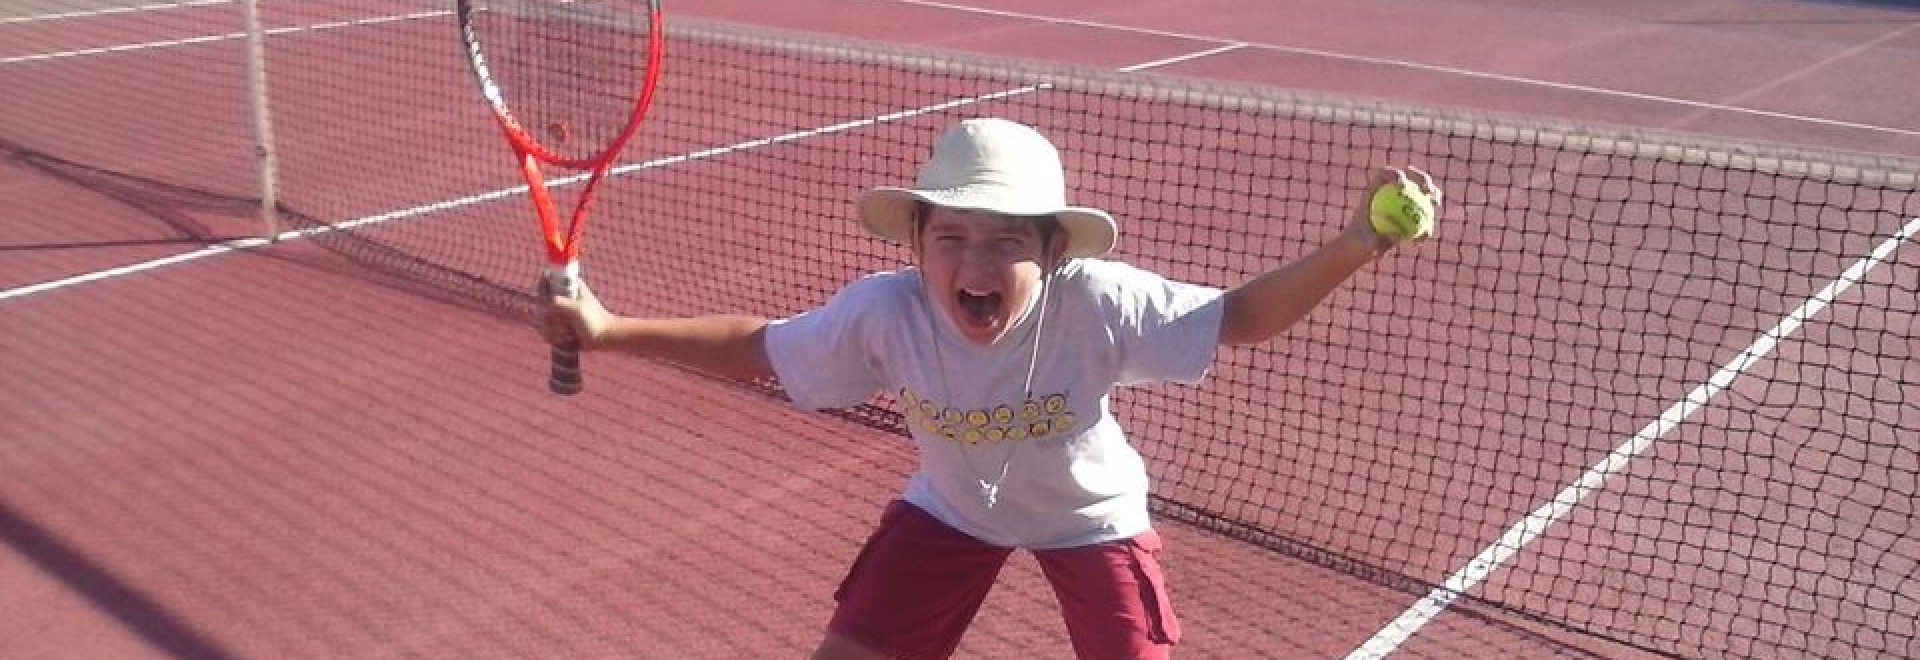 Family (or Junior) Tennis Week  - Corralejo Tennis Academy, Canary Islands